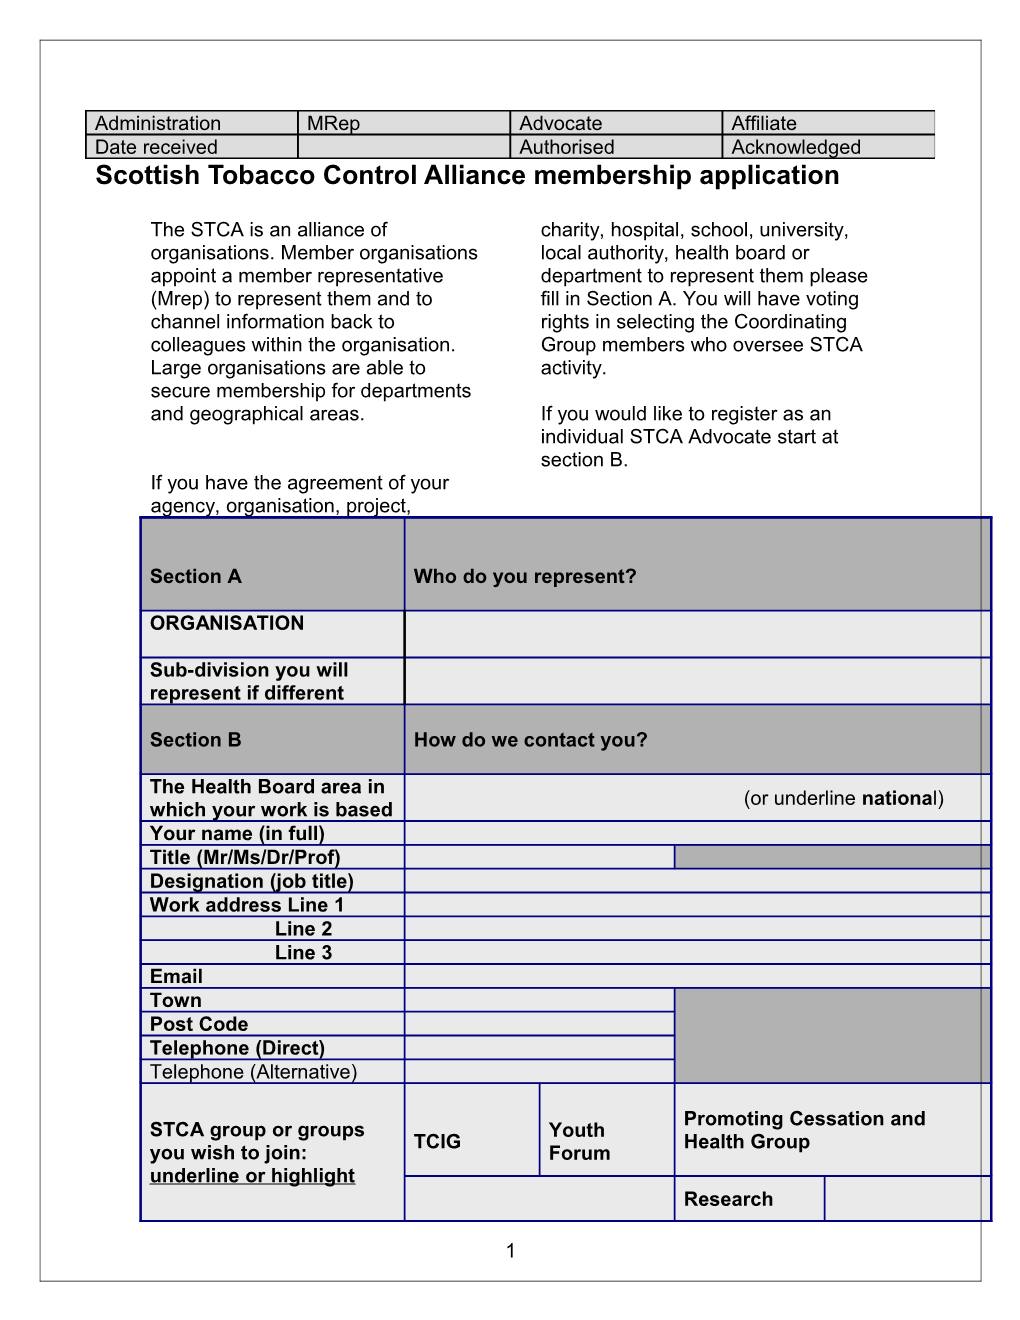 Scottish Tobacco Control Alliance Membership Application